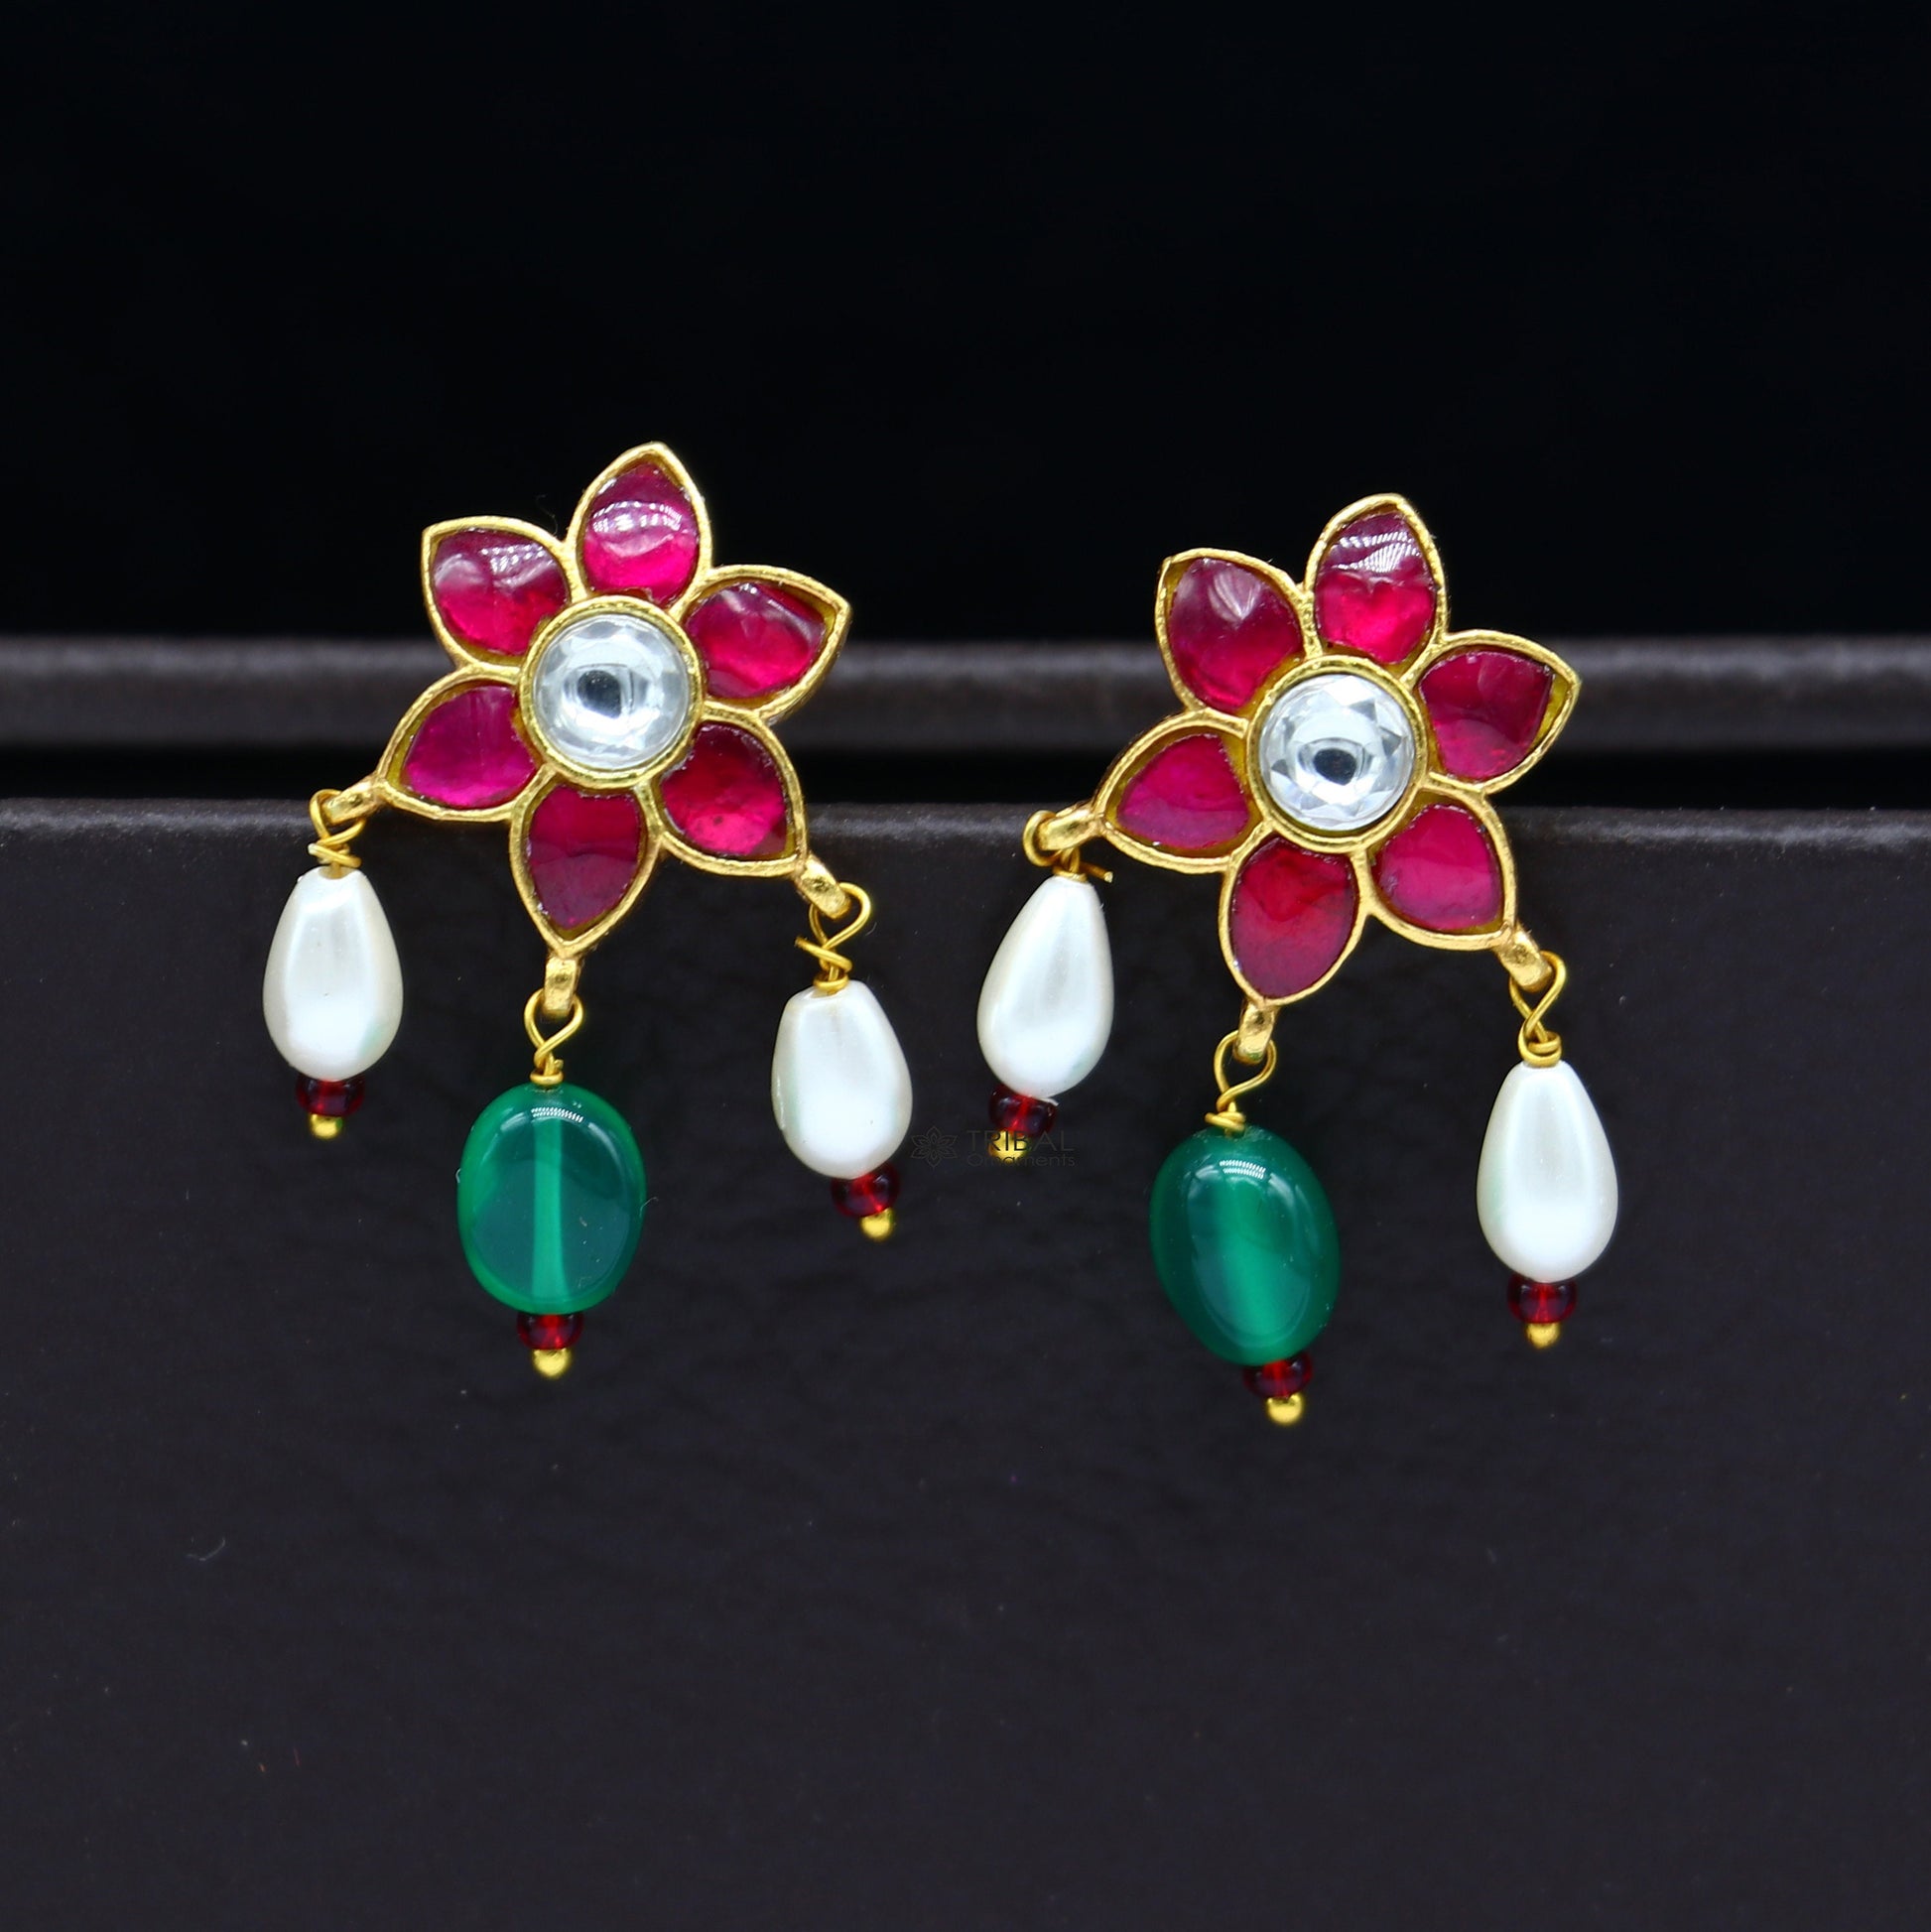 925 sterling silver gold polished handmade kundan work green and red stone fabulous flower shape stud earrings Modern trendy  jewelry s1177 - TRIBAL ORNAMENTS